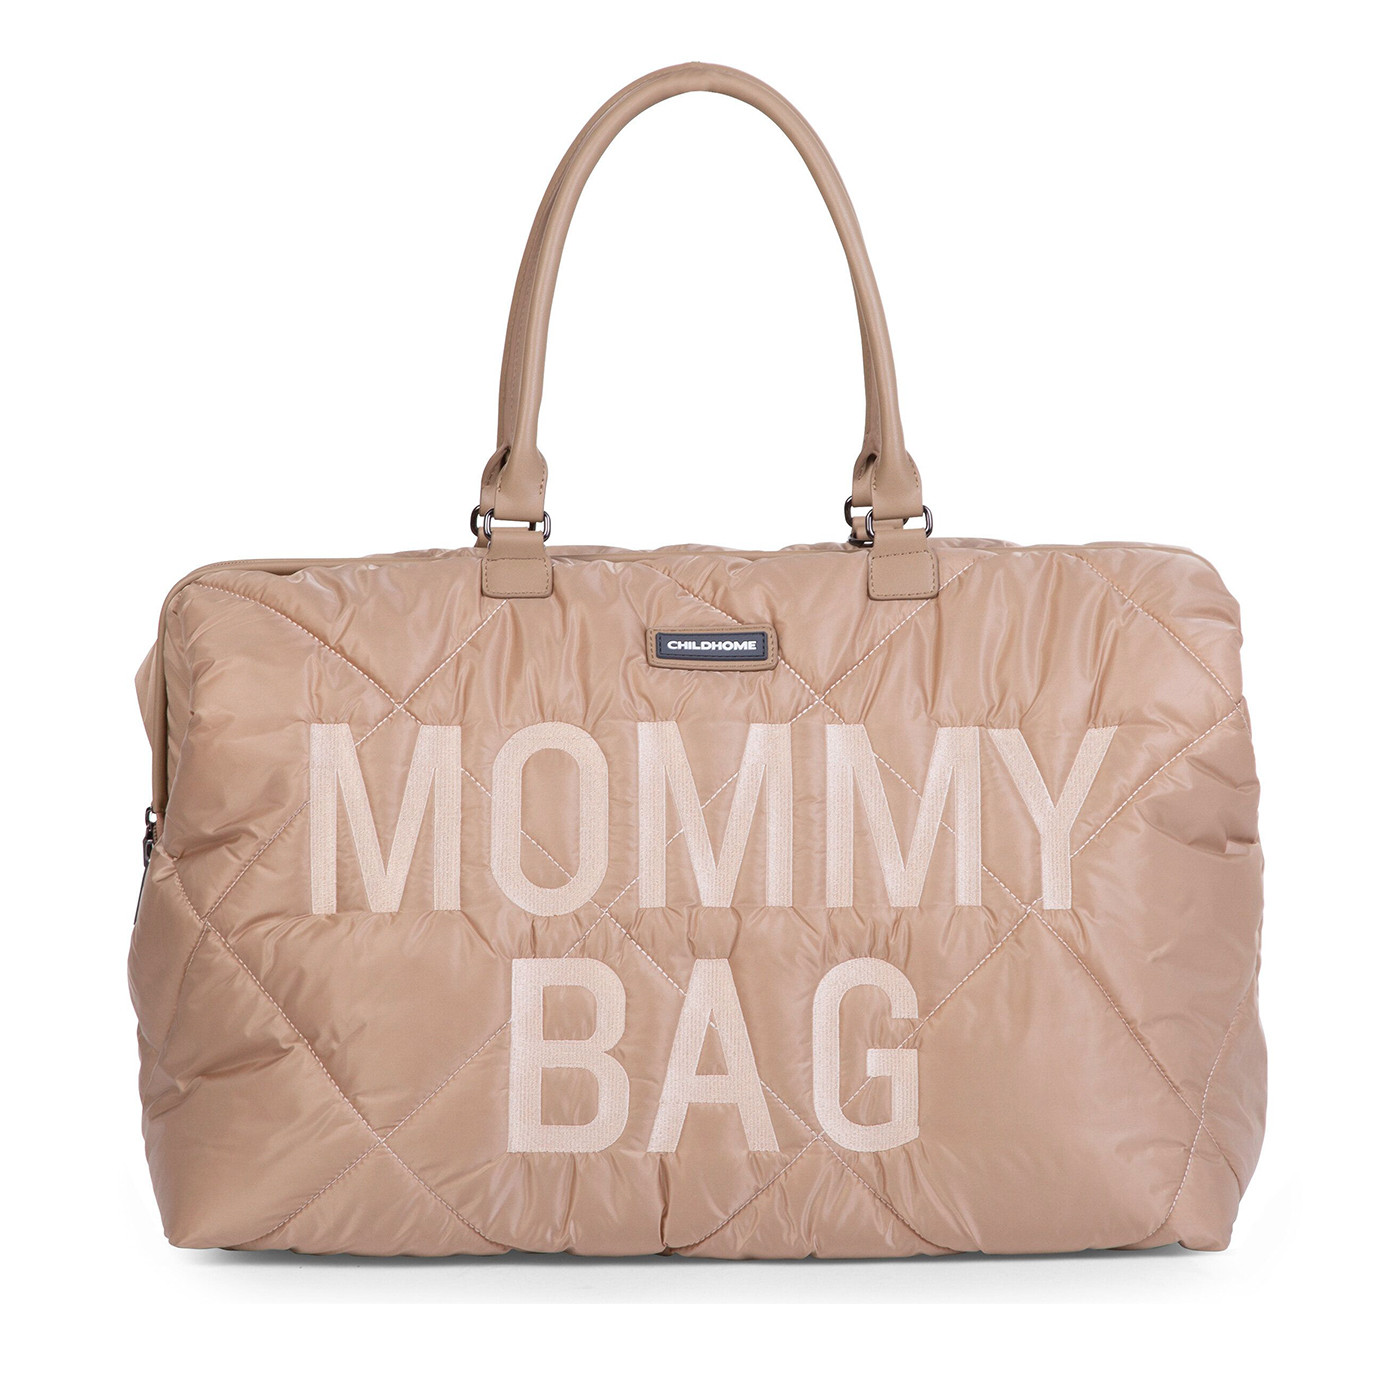 CHILDHOME Childhome Mommy Bag Puffy Anne Bebek Çantası | Bej